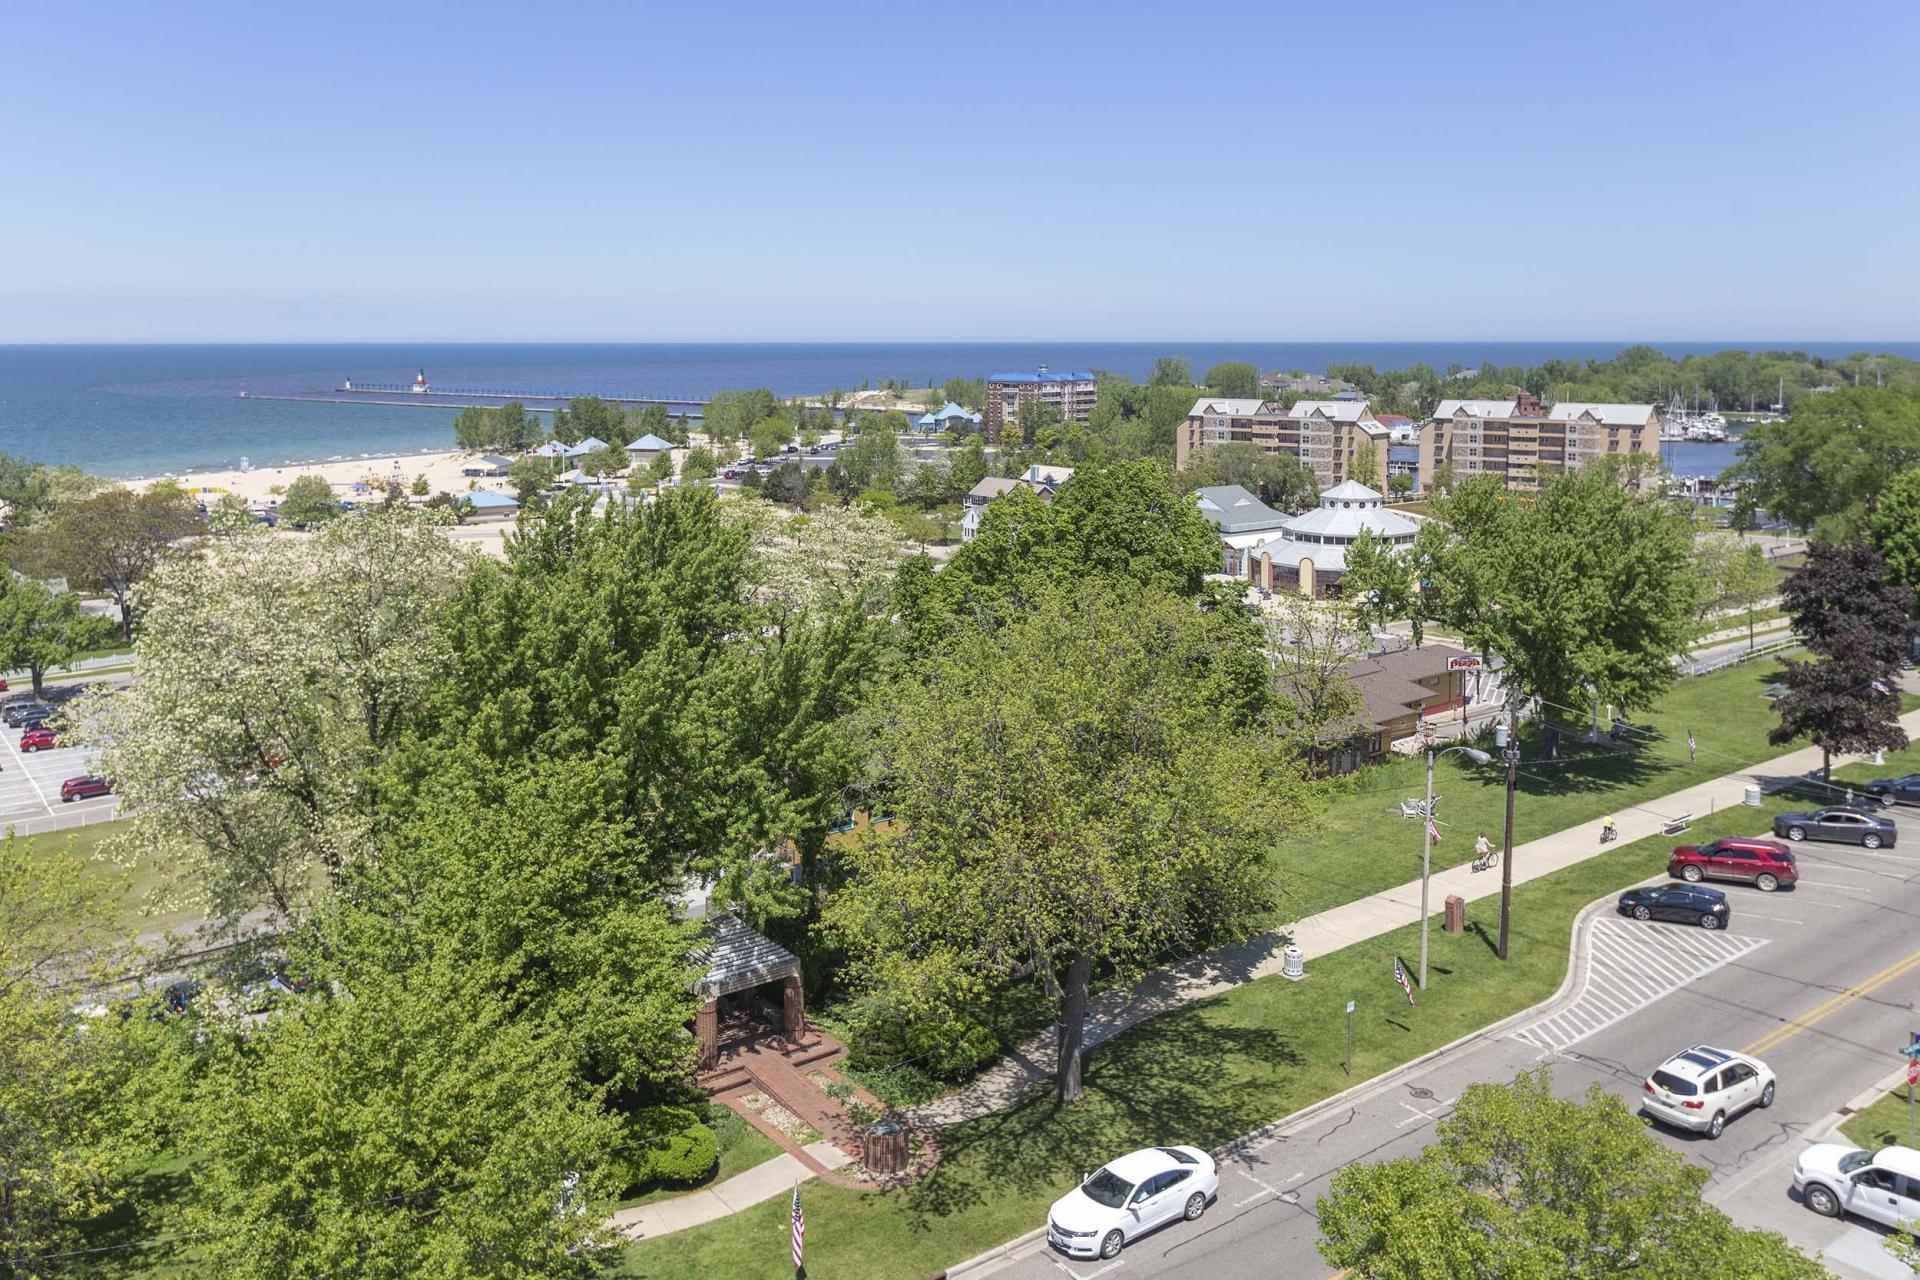 View of Saint Joseph, Michigan and Lake Michigan from the Boulevard Inn.